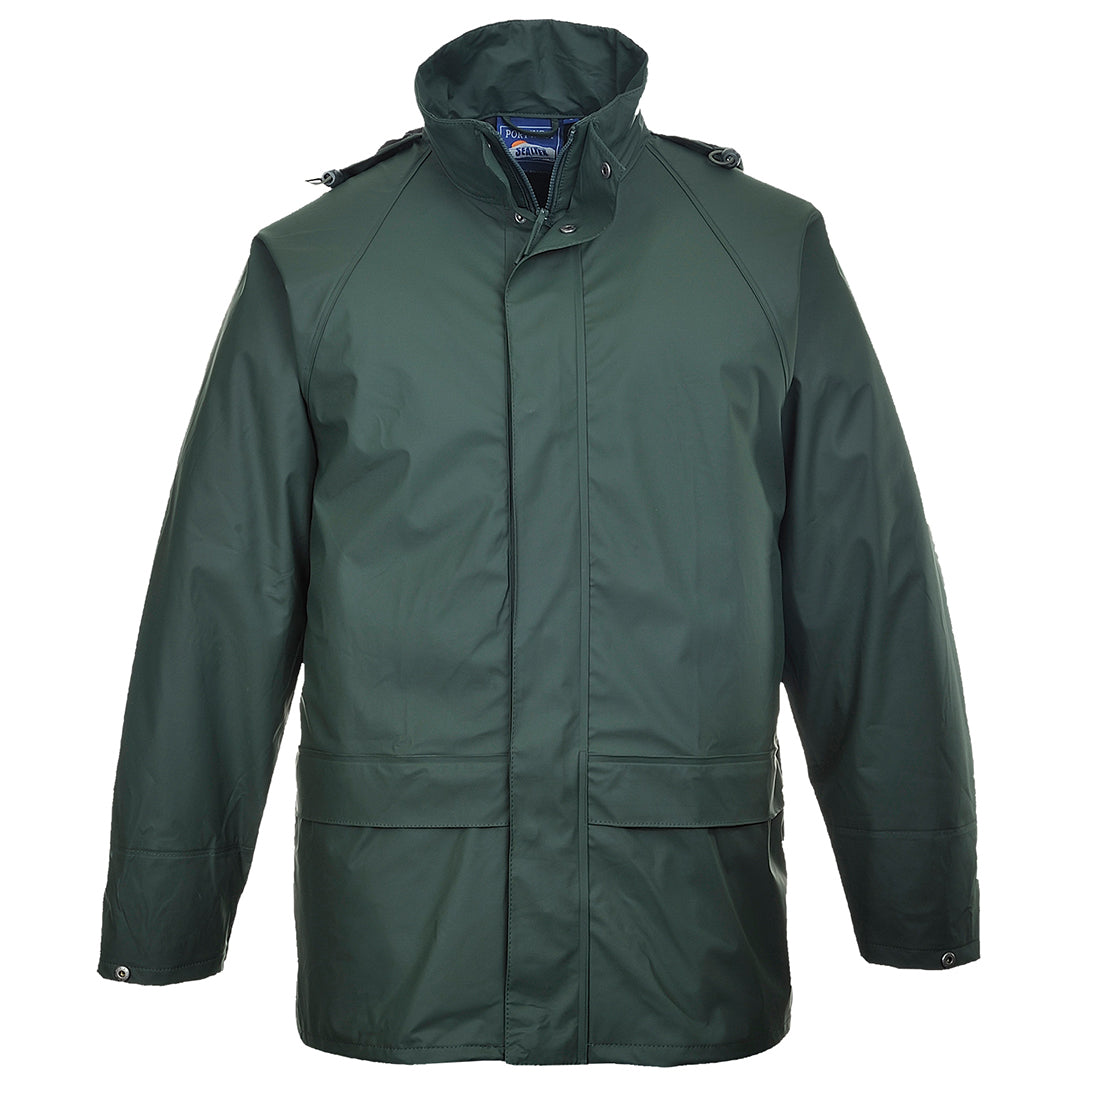 Portwest S450 Olive Sz L Sealtex Classic Jacket Waterproof Rain Coat Parka Work Wear